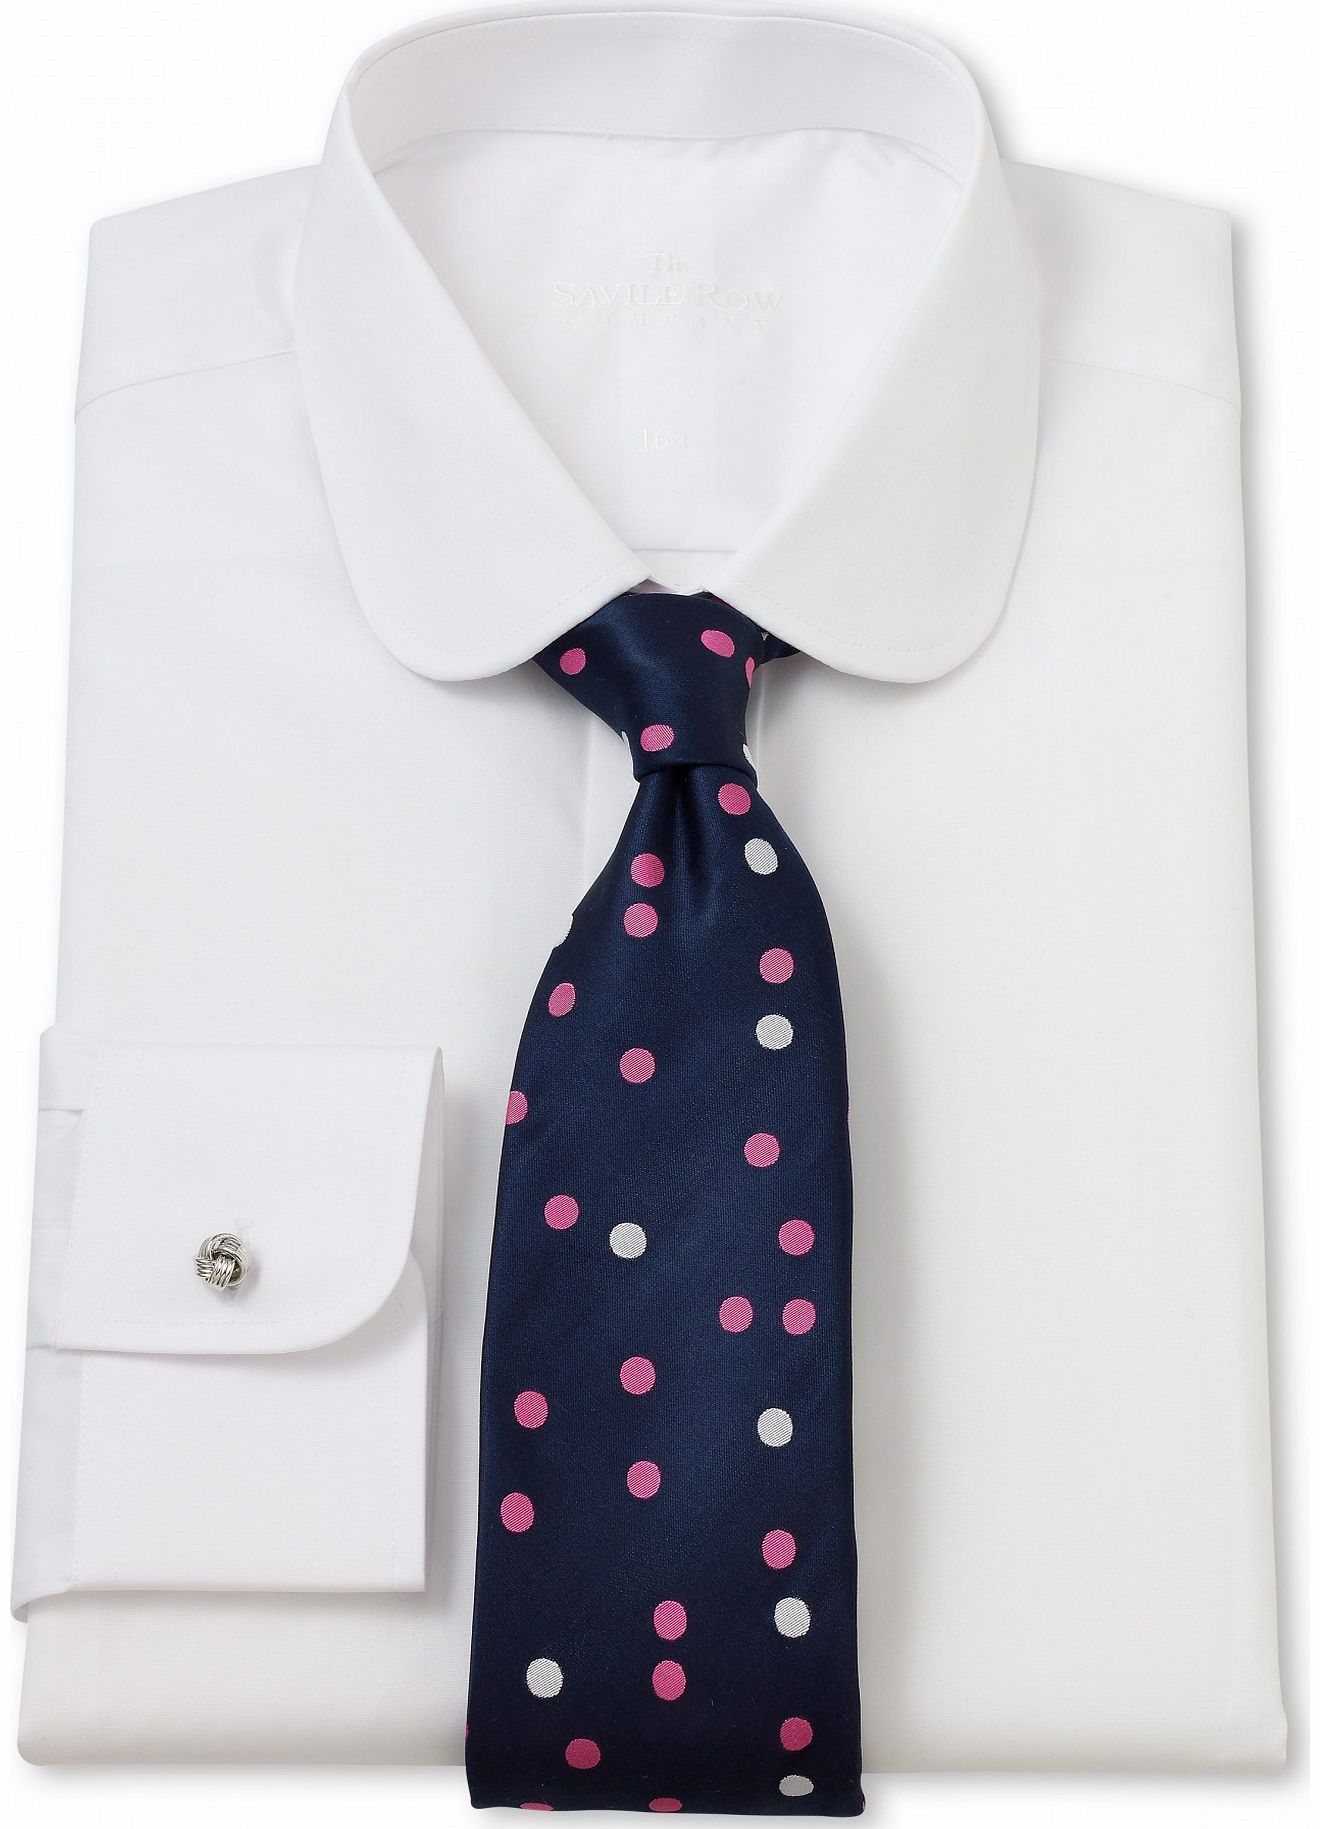 Savile Row Company White Round Collar Slim Fit Shirt 17`` Standard